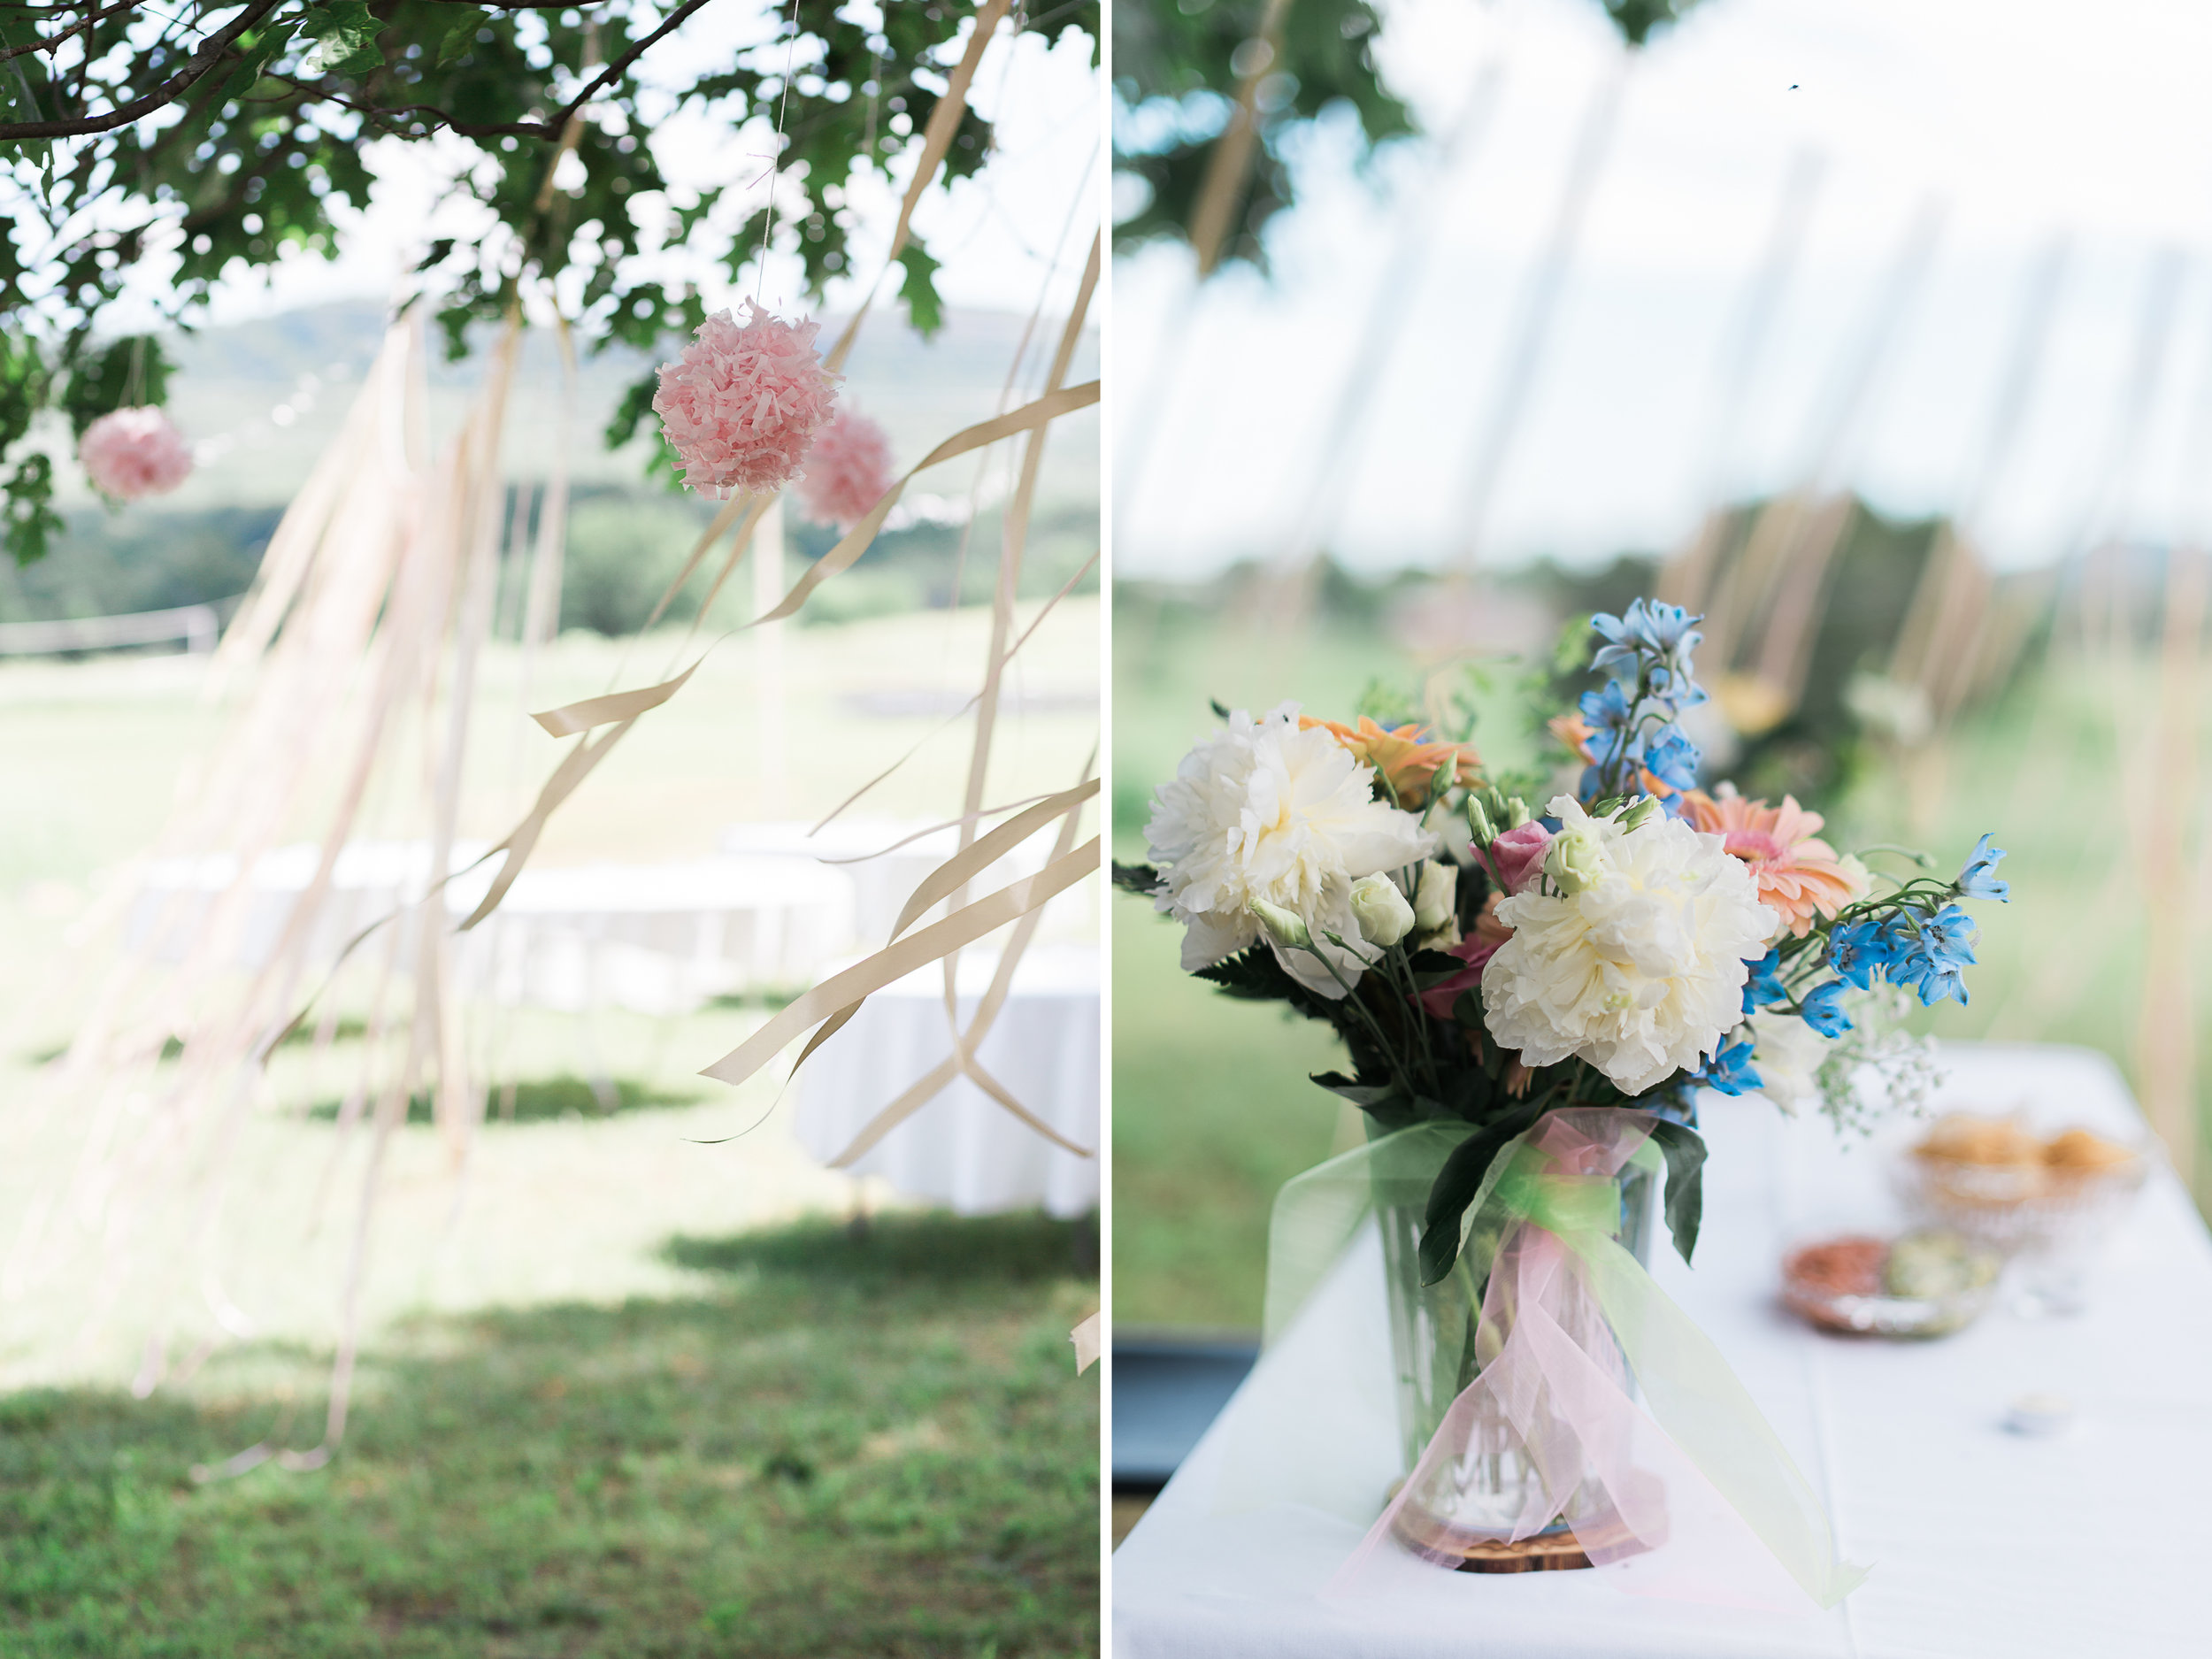 Backyard Wedding Photography in the Berkshires